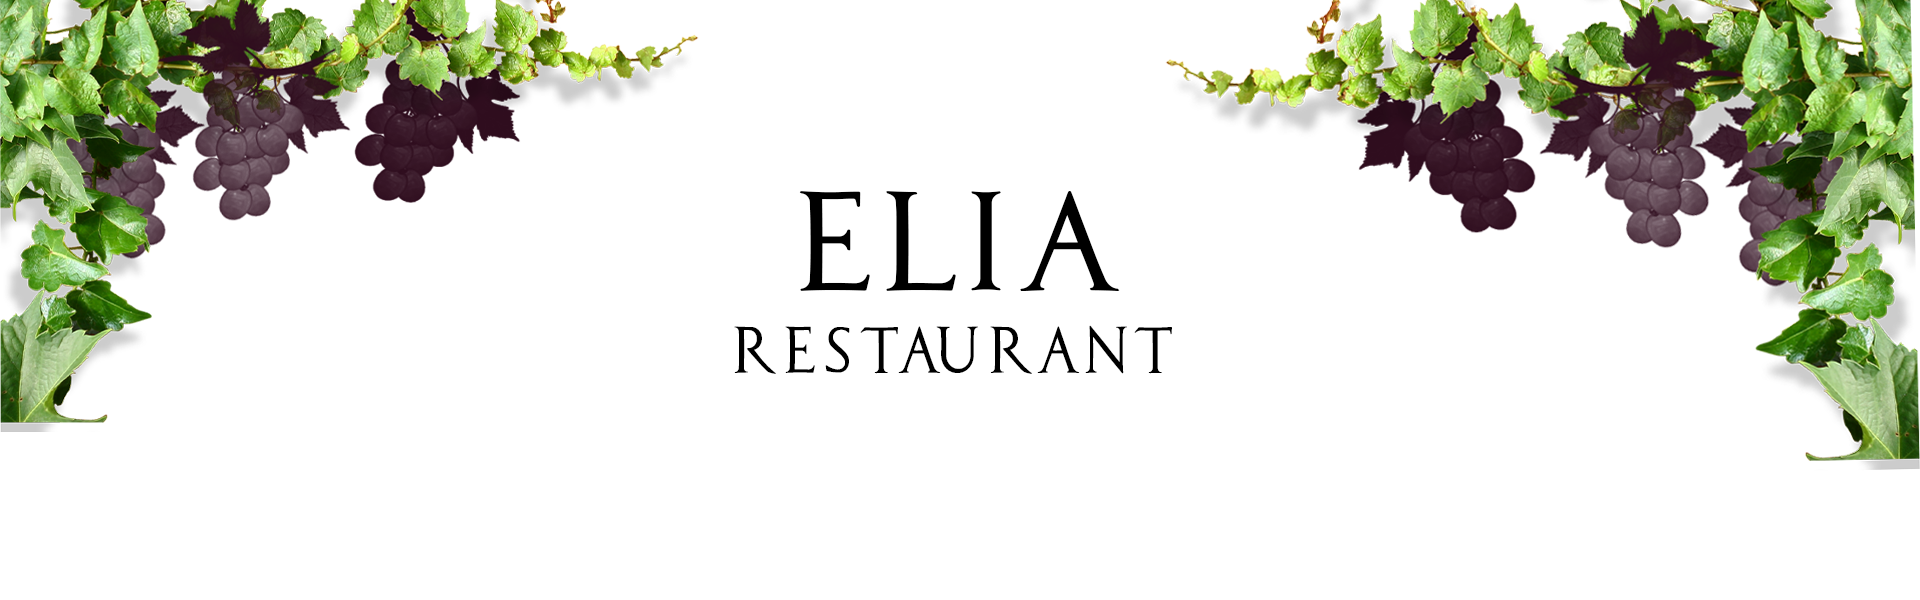 Elia Restaurant logo